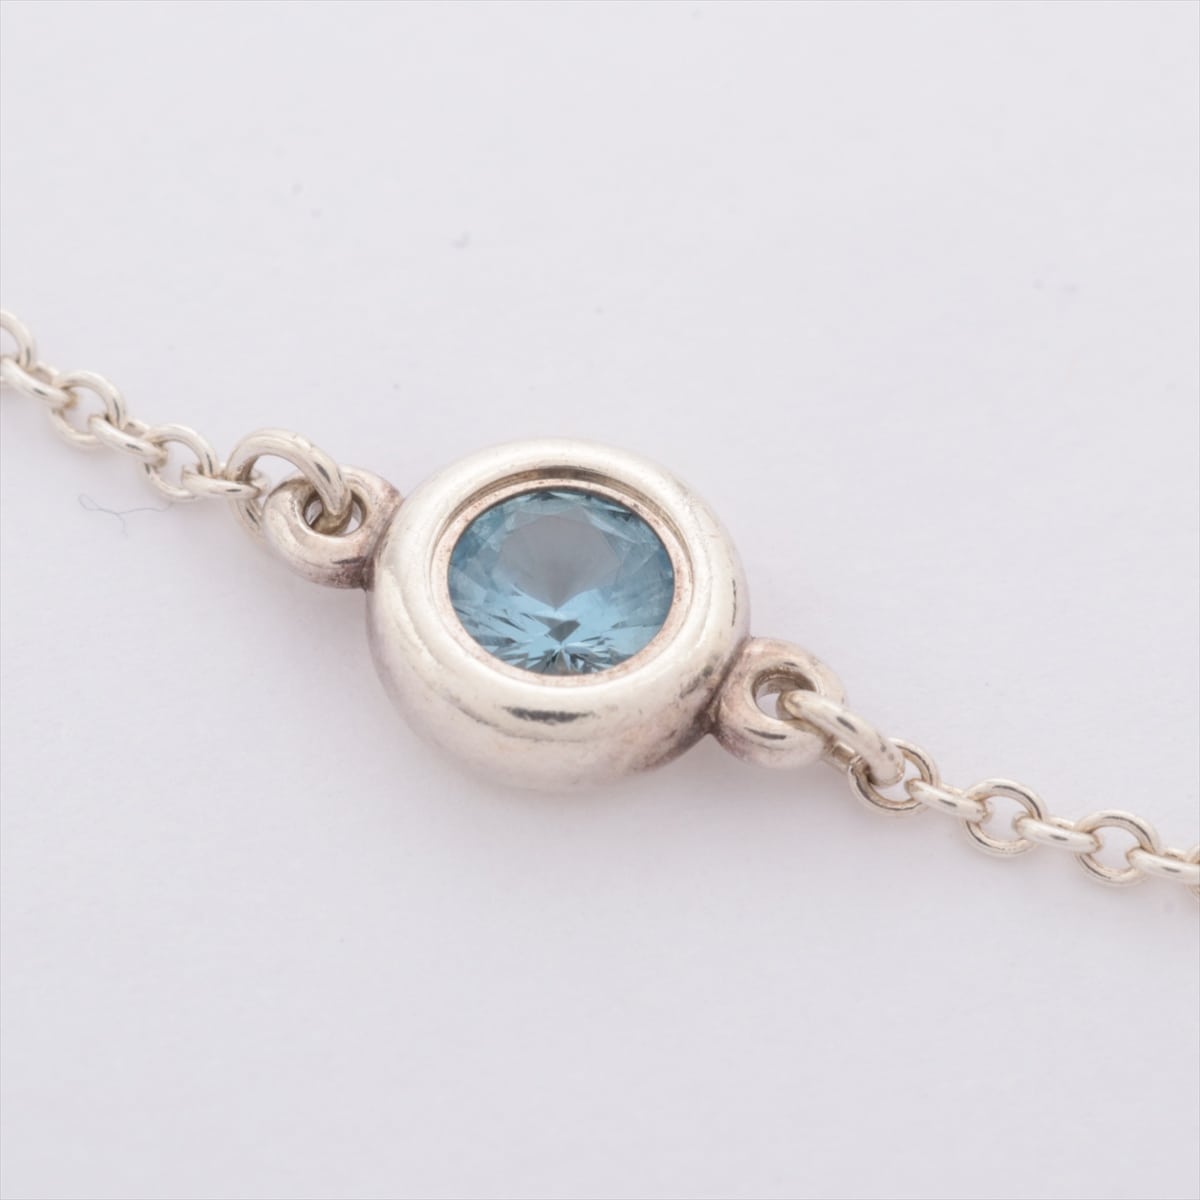 Tiffany By the Yard Bracelet 925 1.1g Silver